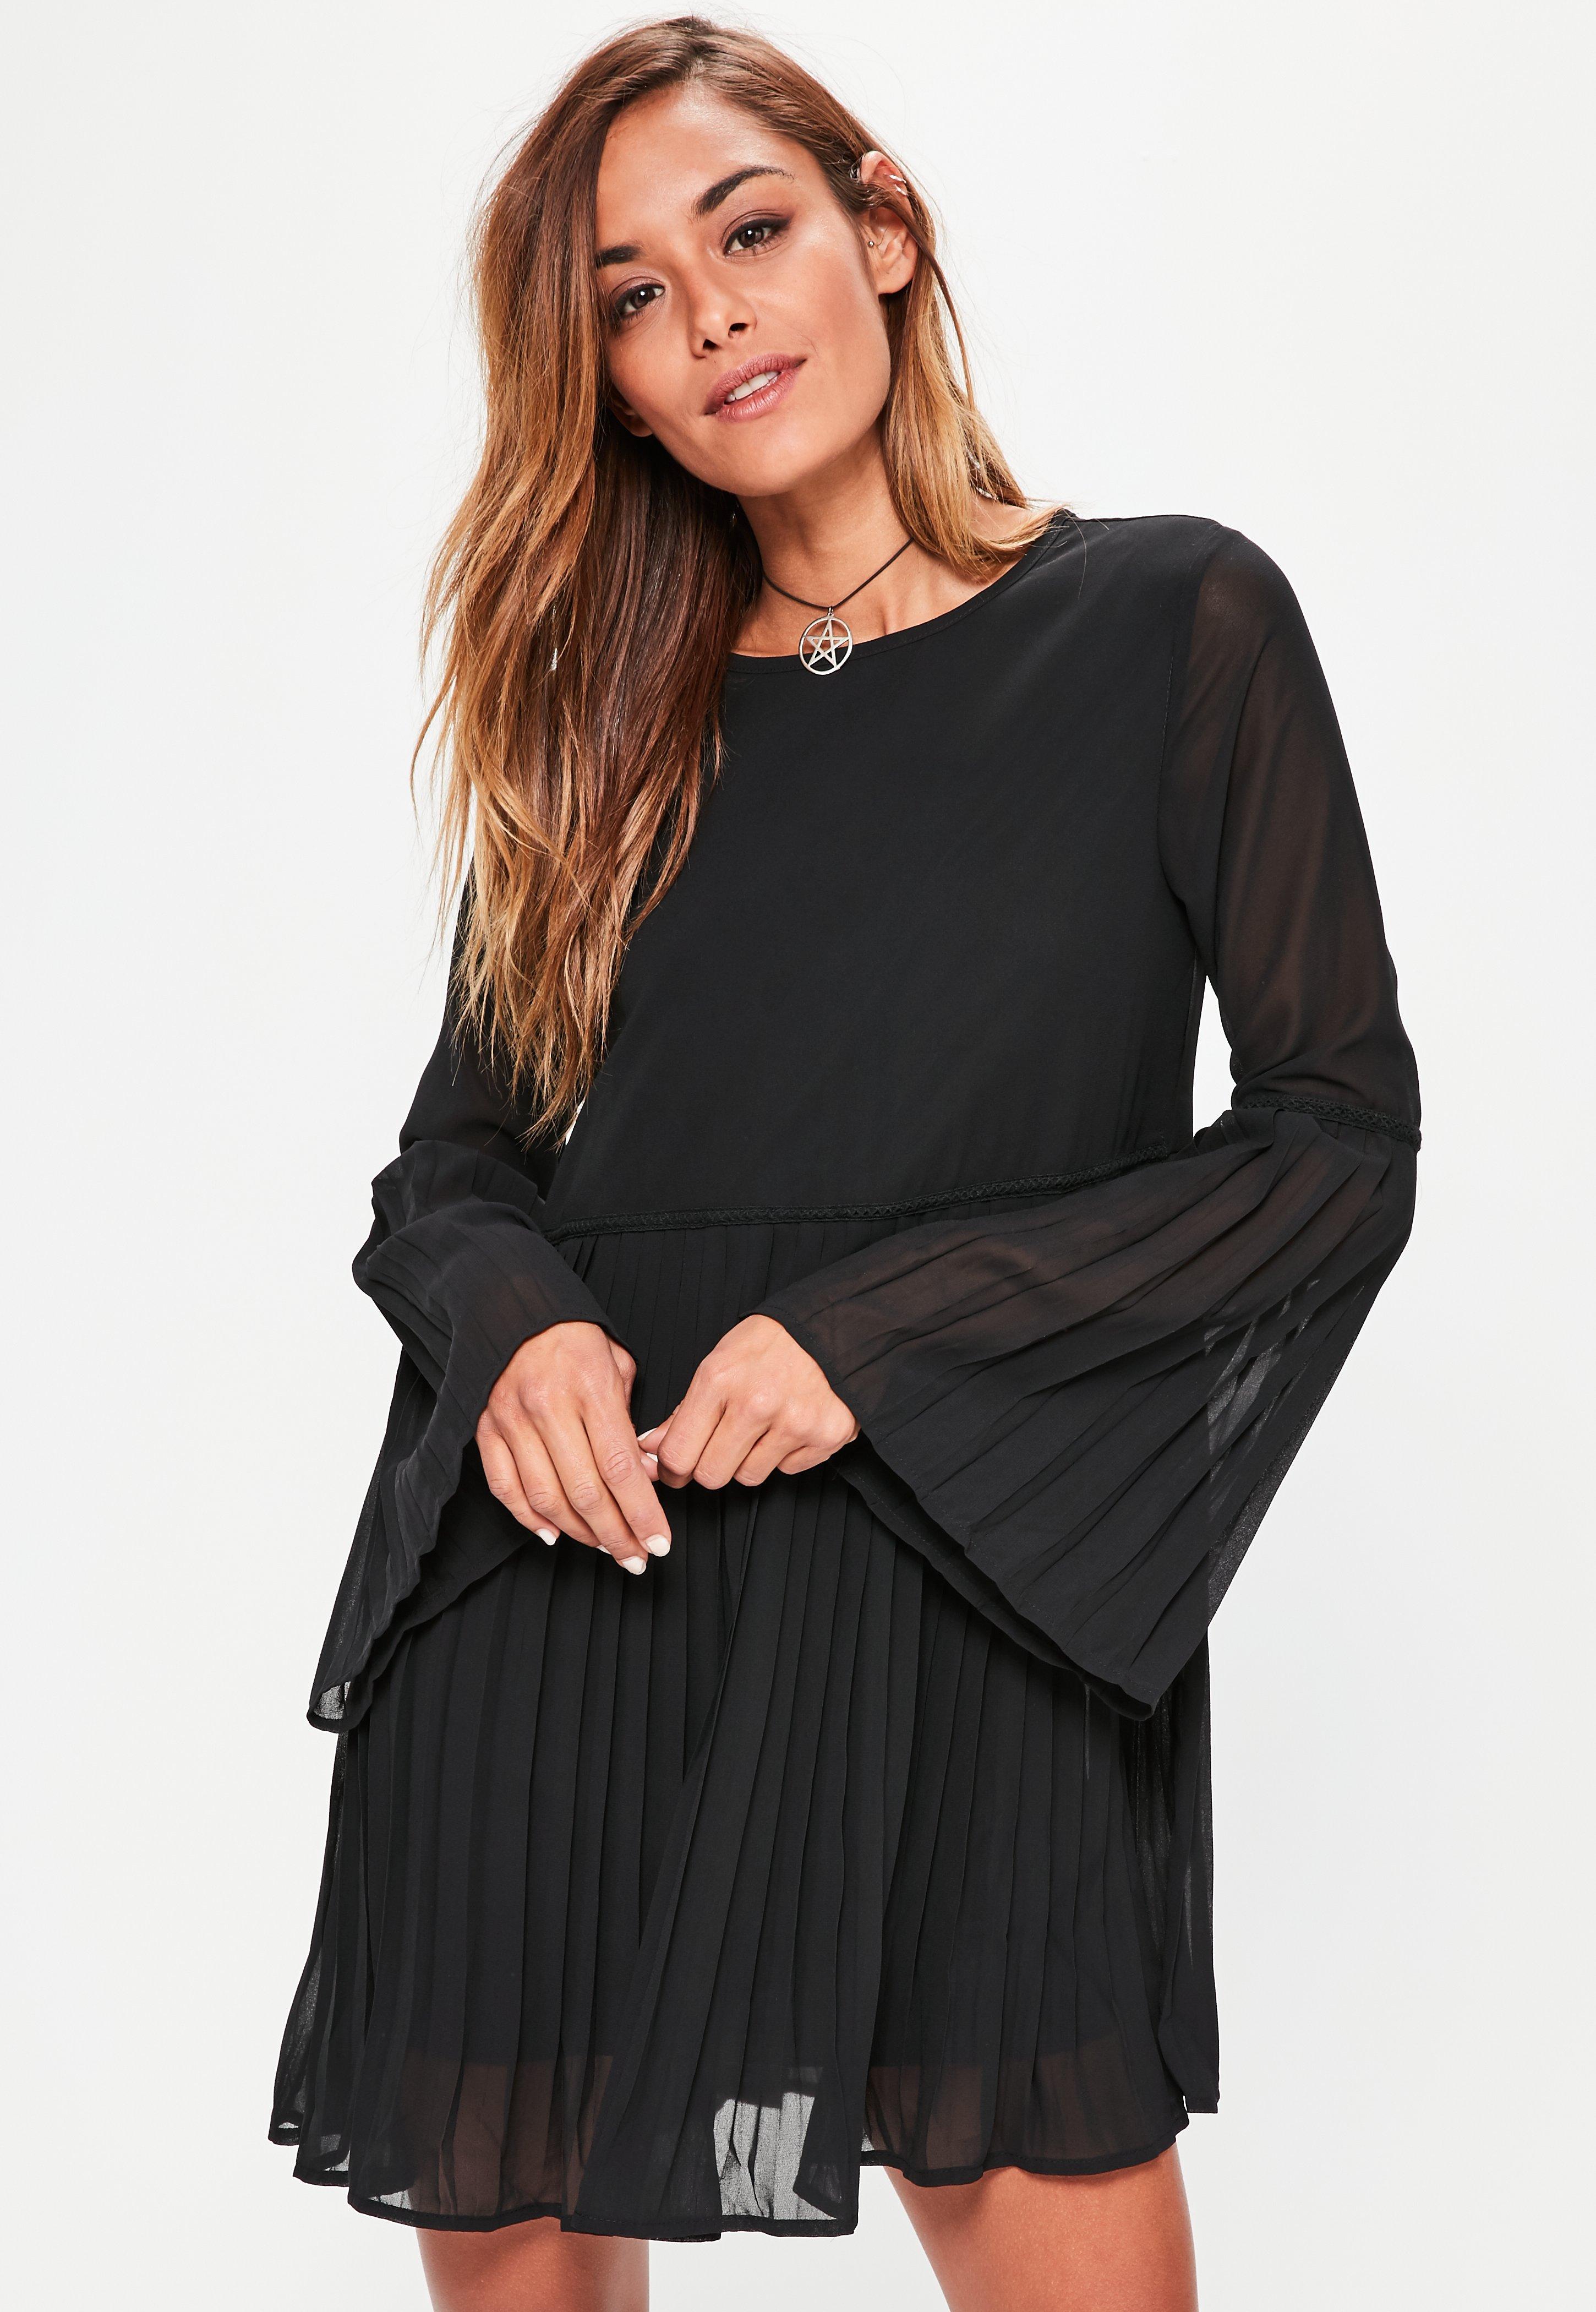 Lyst - Missguided Black Long Sleeve Pleated Swing Dress in Black